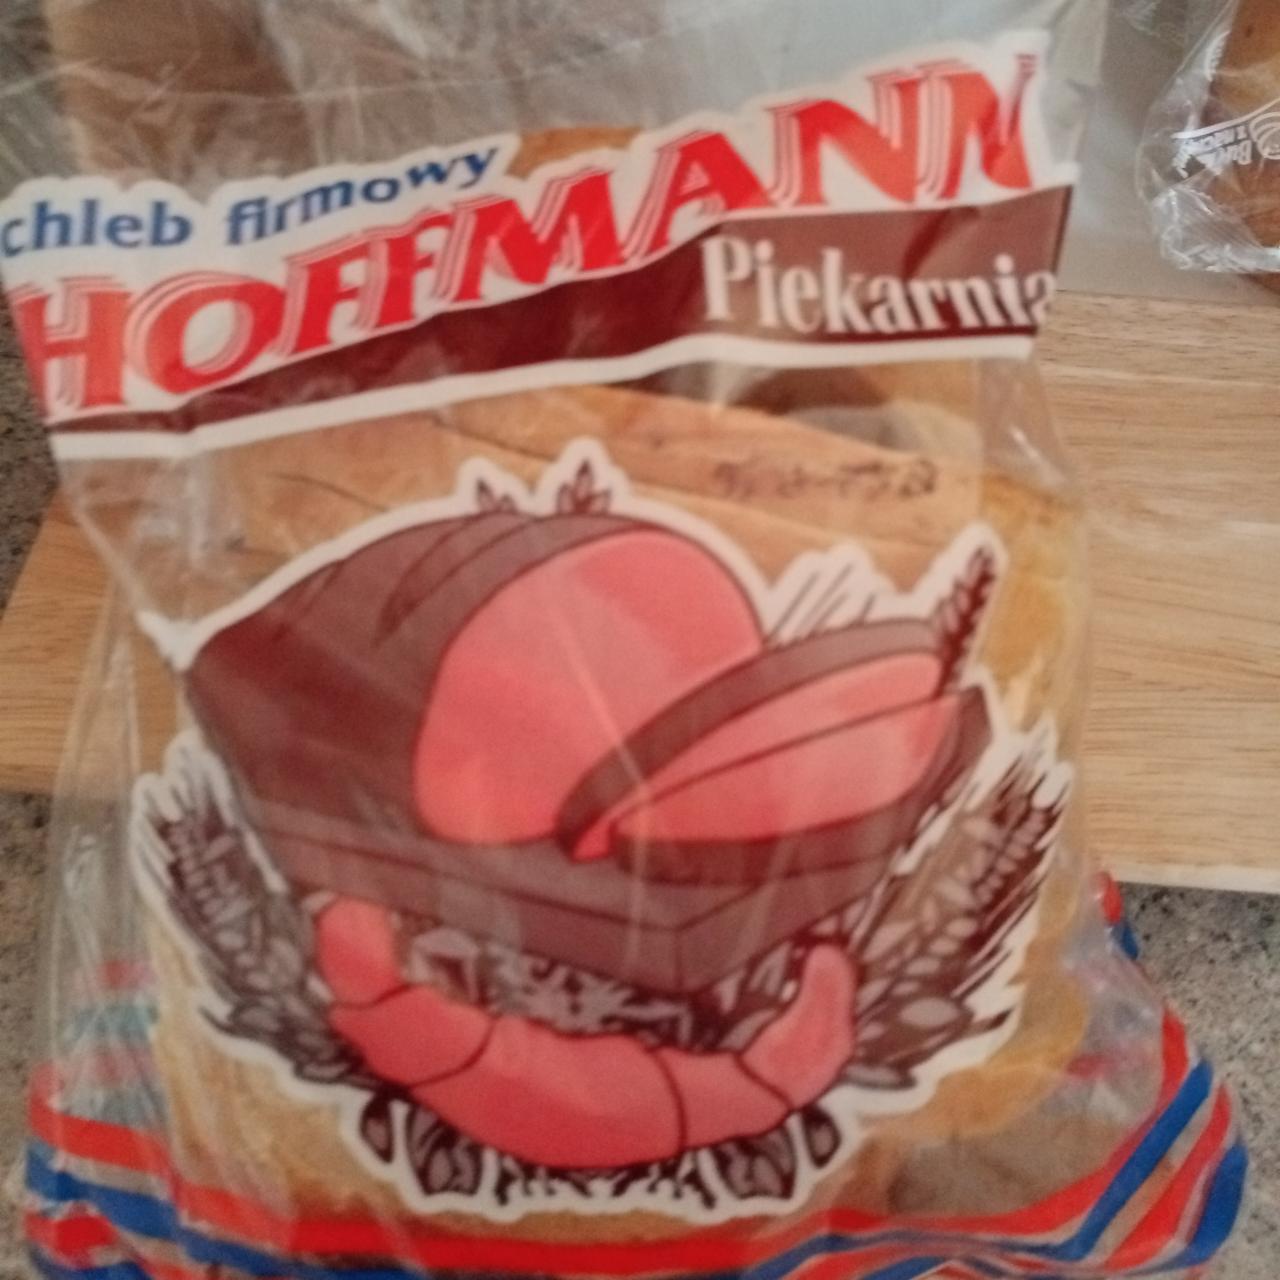 Zdjęcia - chleb firmowy Hoffmann